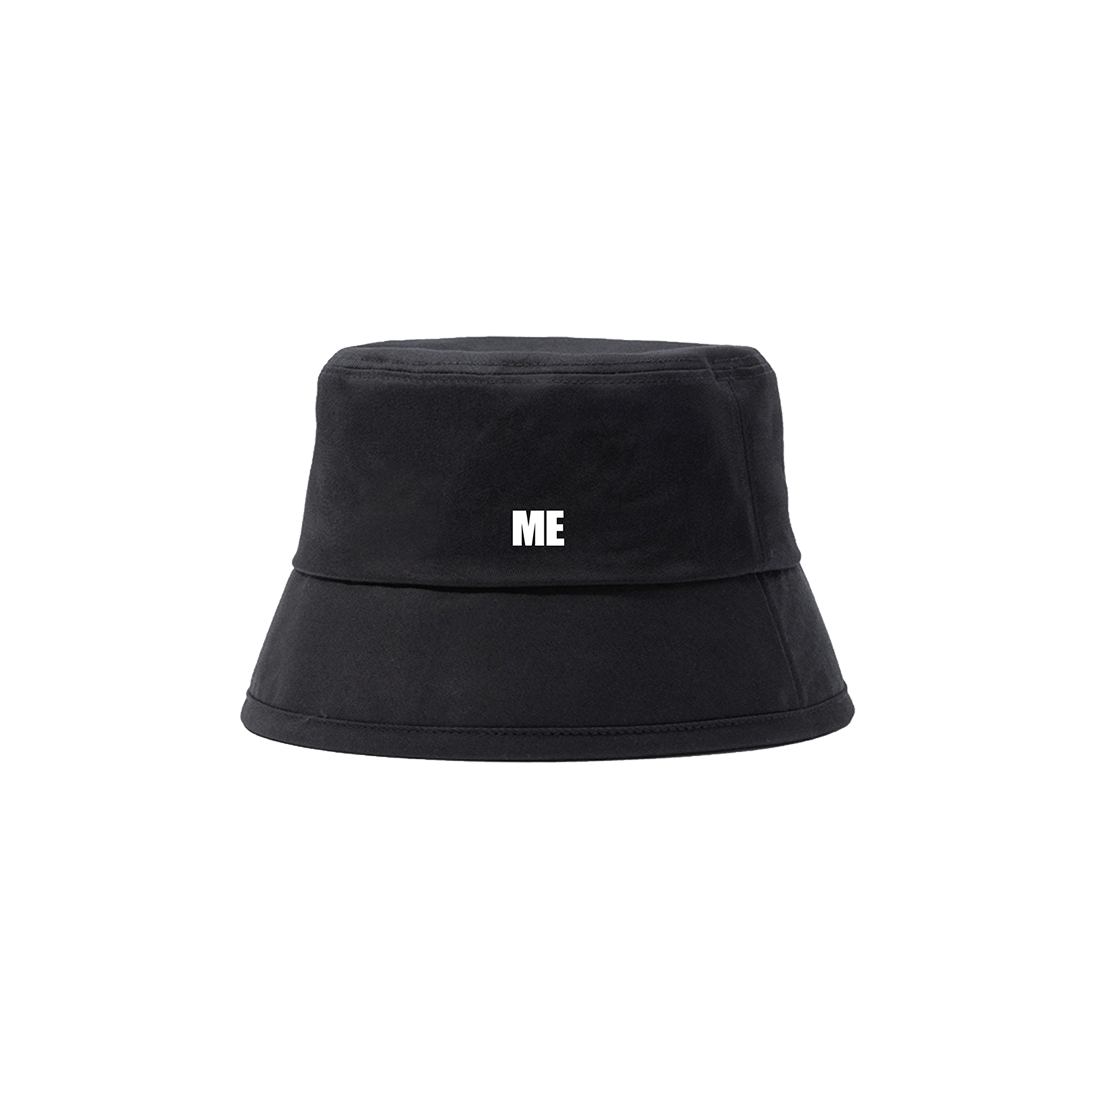 BLACKPINK - Jisoo Me Bucket Hat